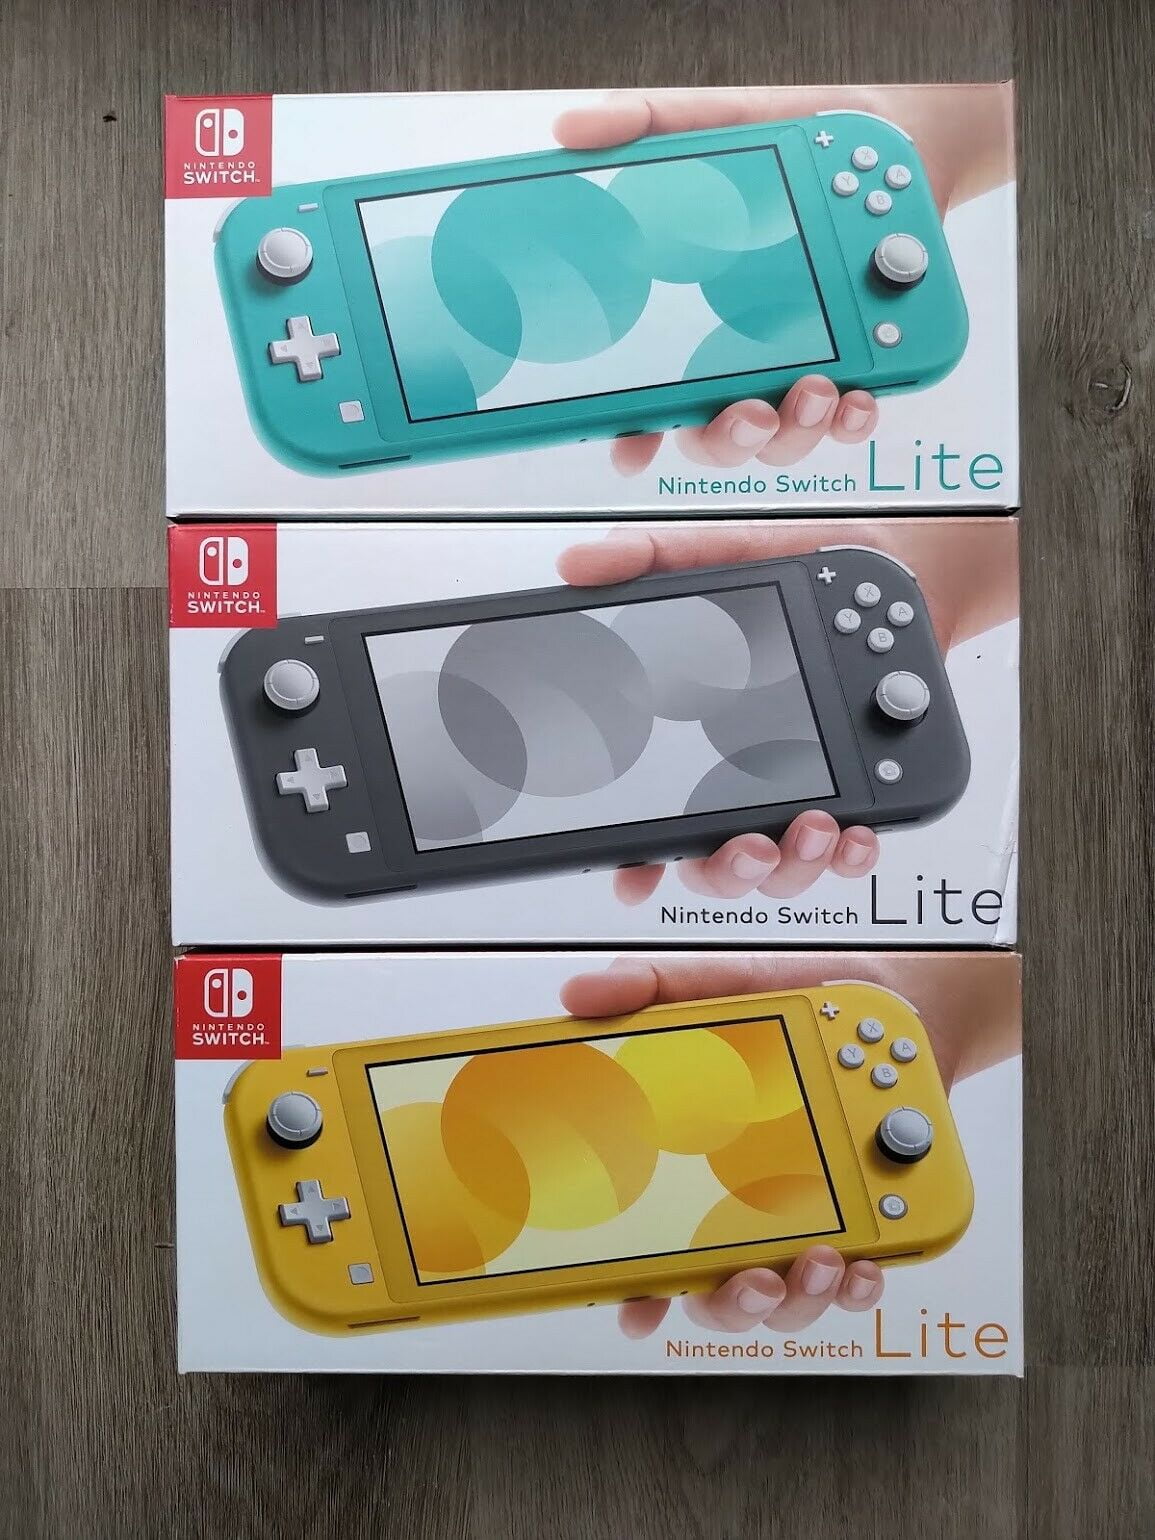 Nintendo Switch Lite 32GB Console - Yellow Turquoise Gray - Walmart.com